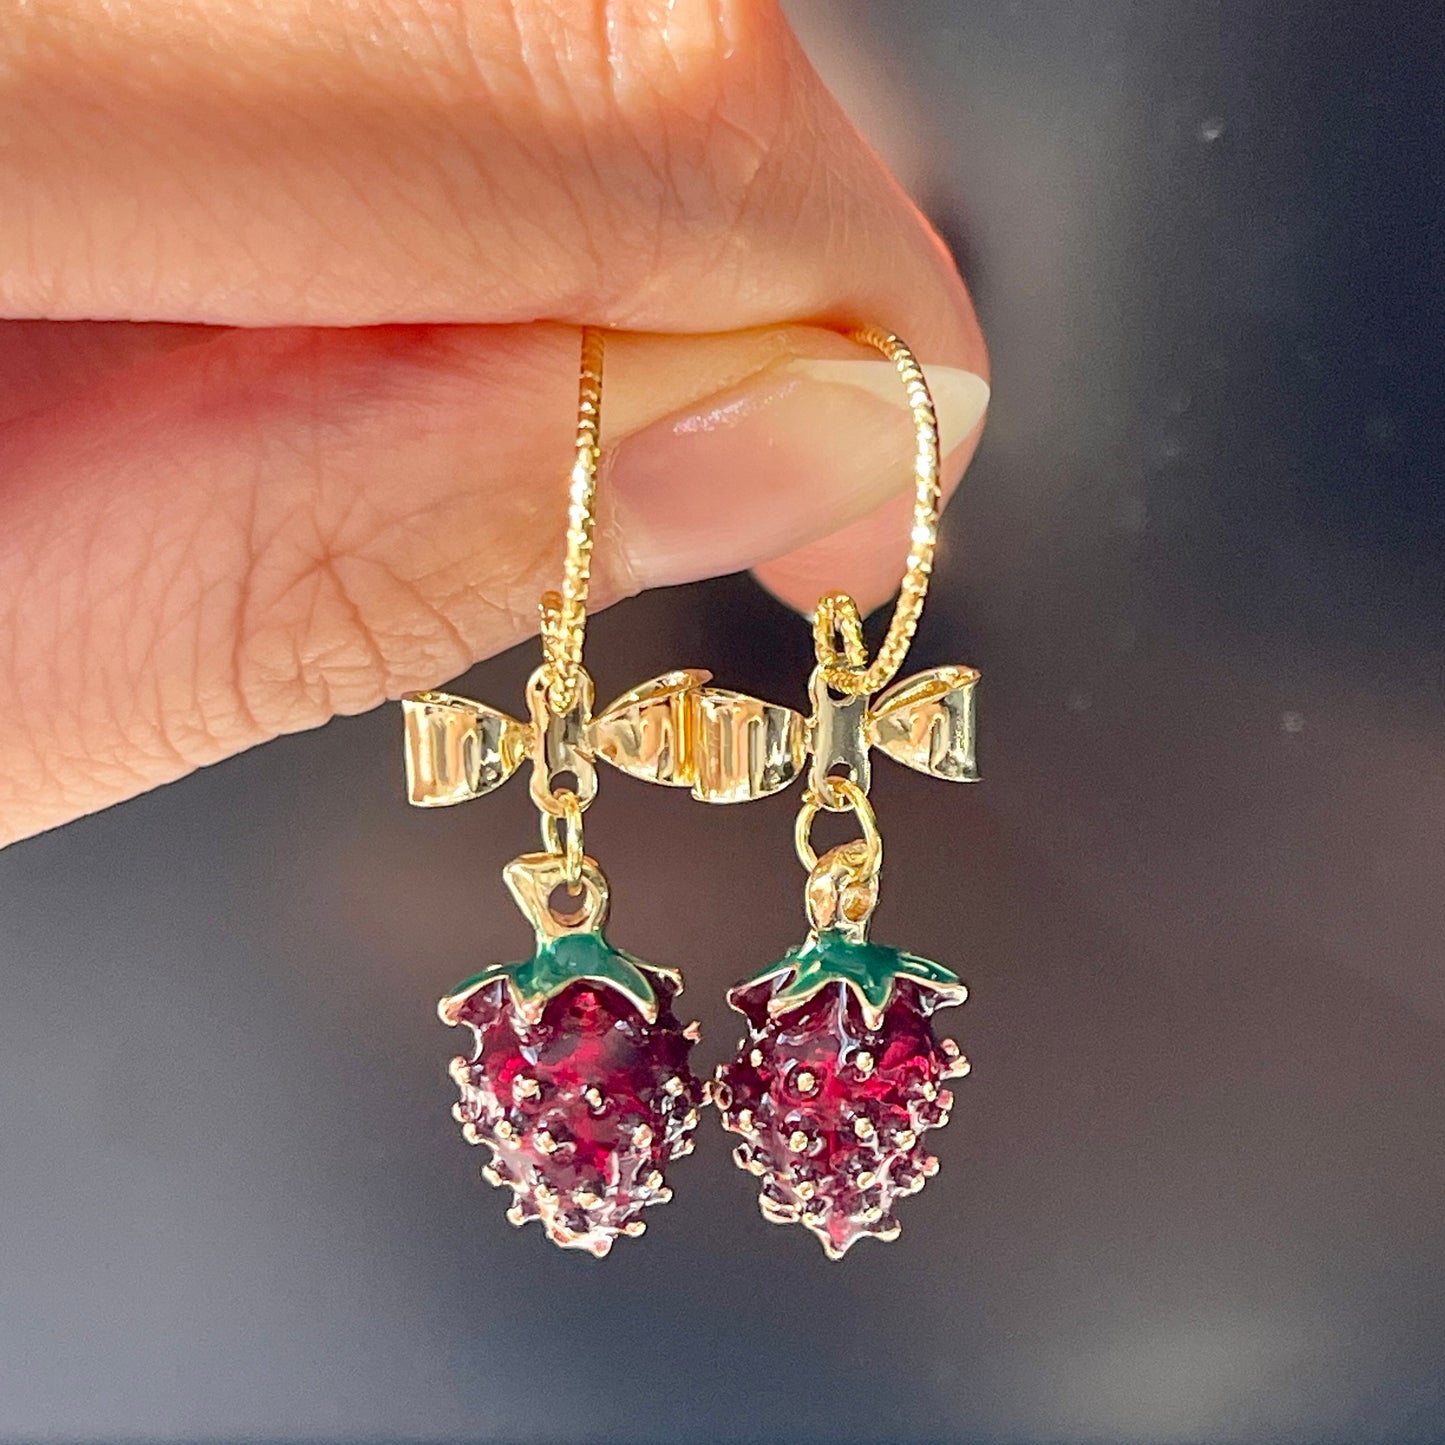 Delicate Red Strawberry Earrings, 14K Gold Bow Ribbon Earrings, Burgundy Red Earrings, Fruit Miniature Earrings, Cute Birthday Holiday Gift